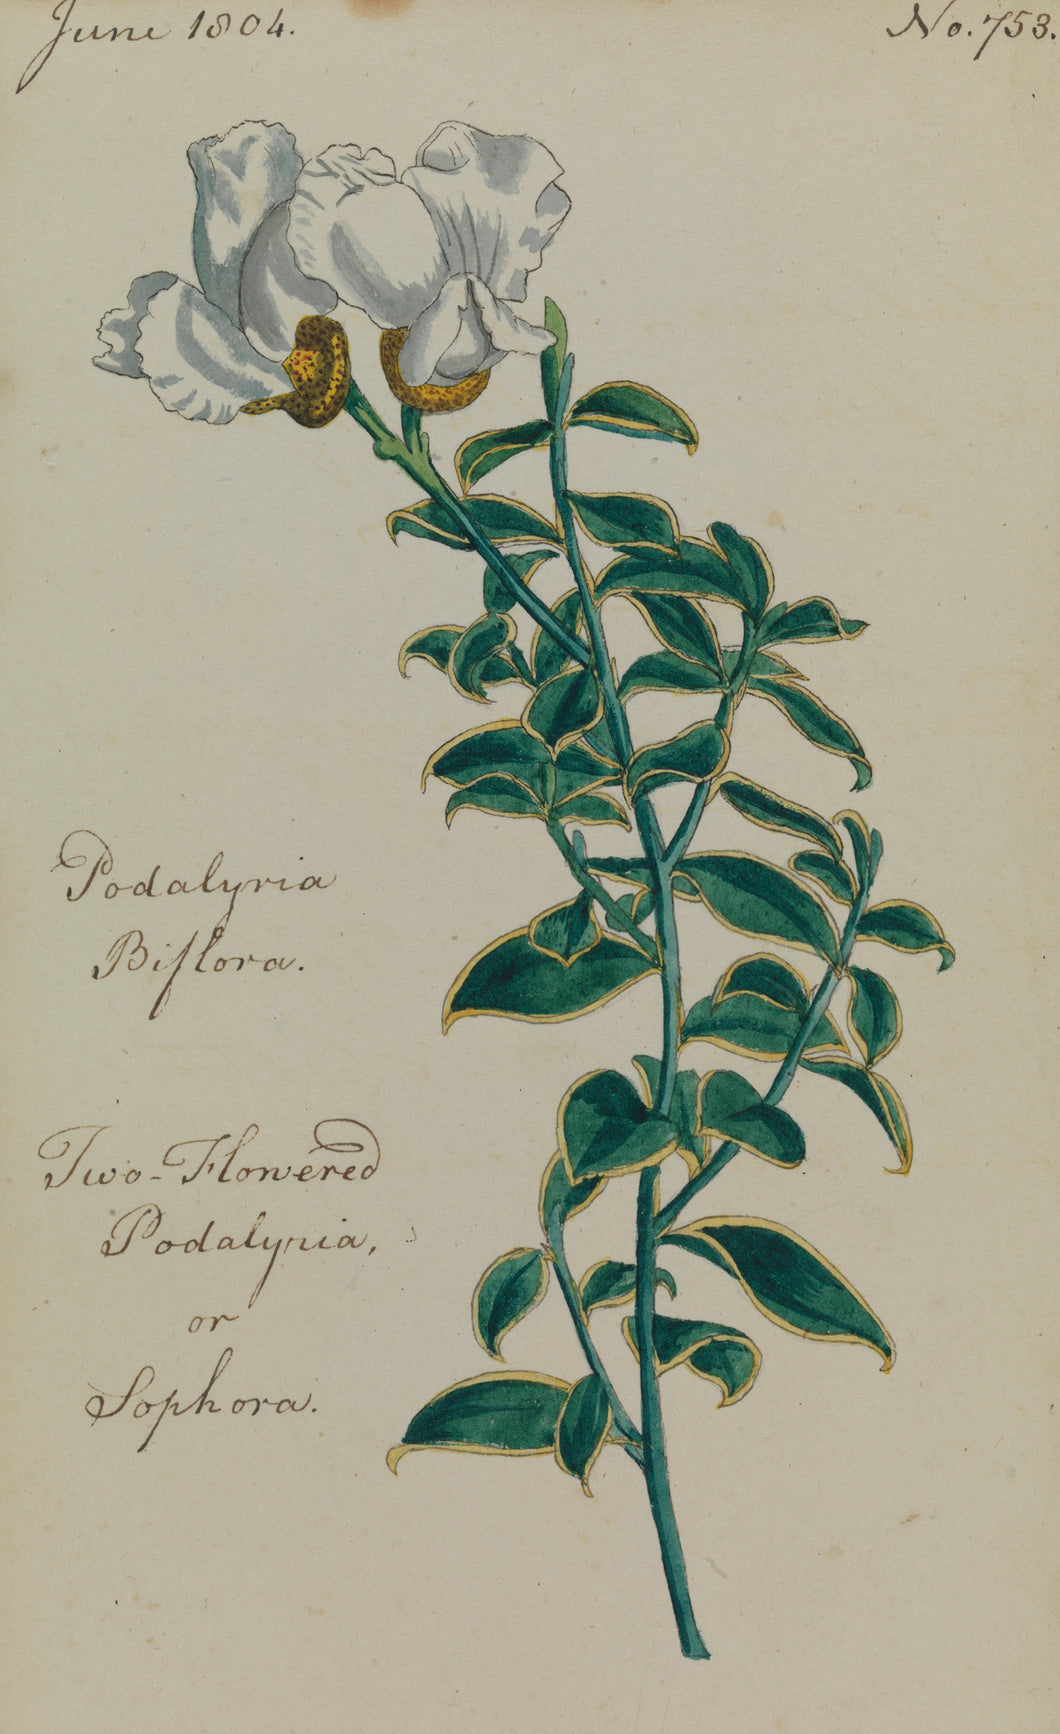 Two-flowered Podalyria